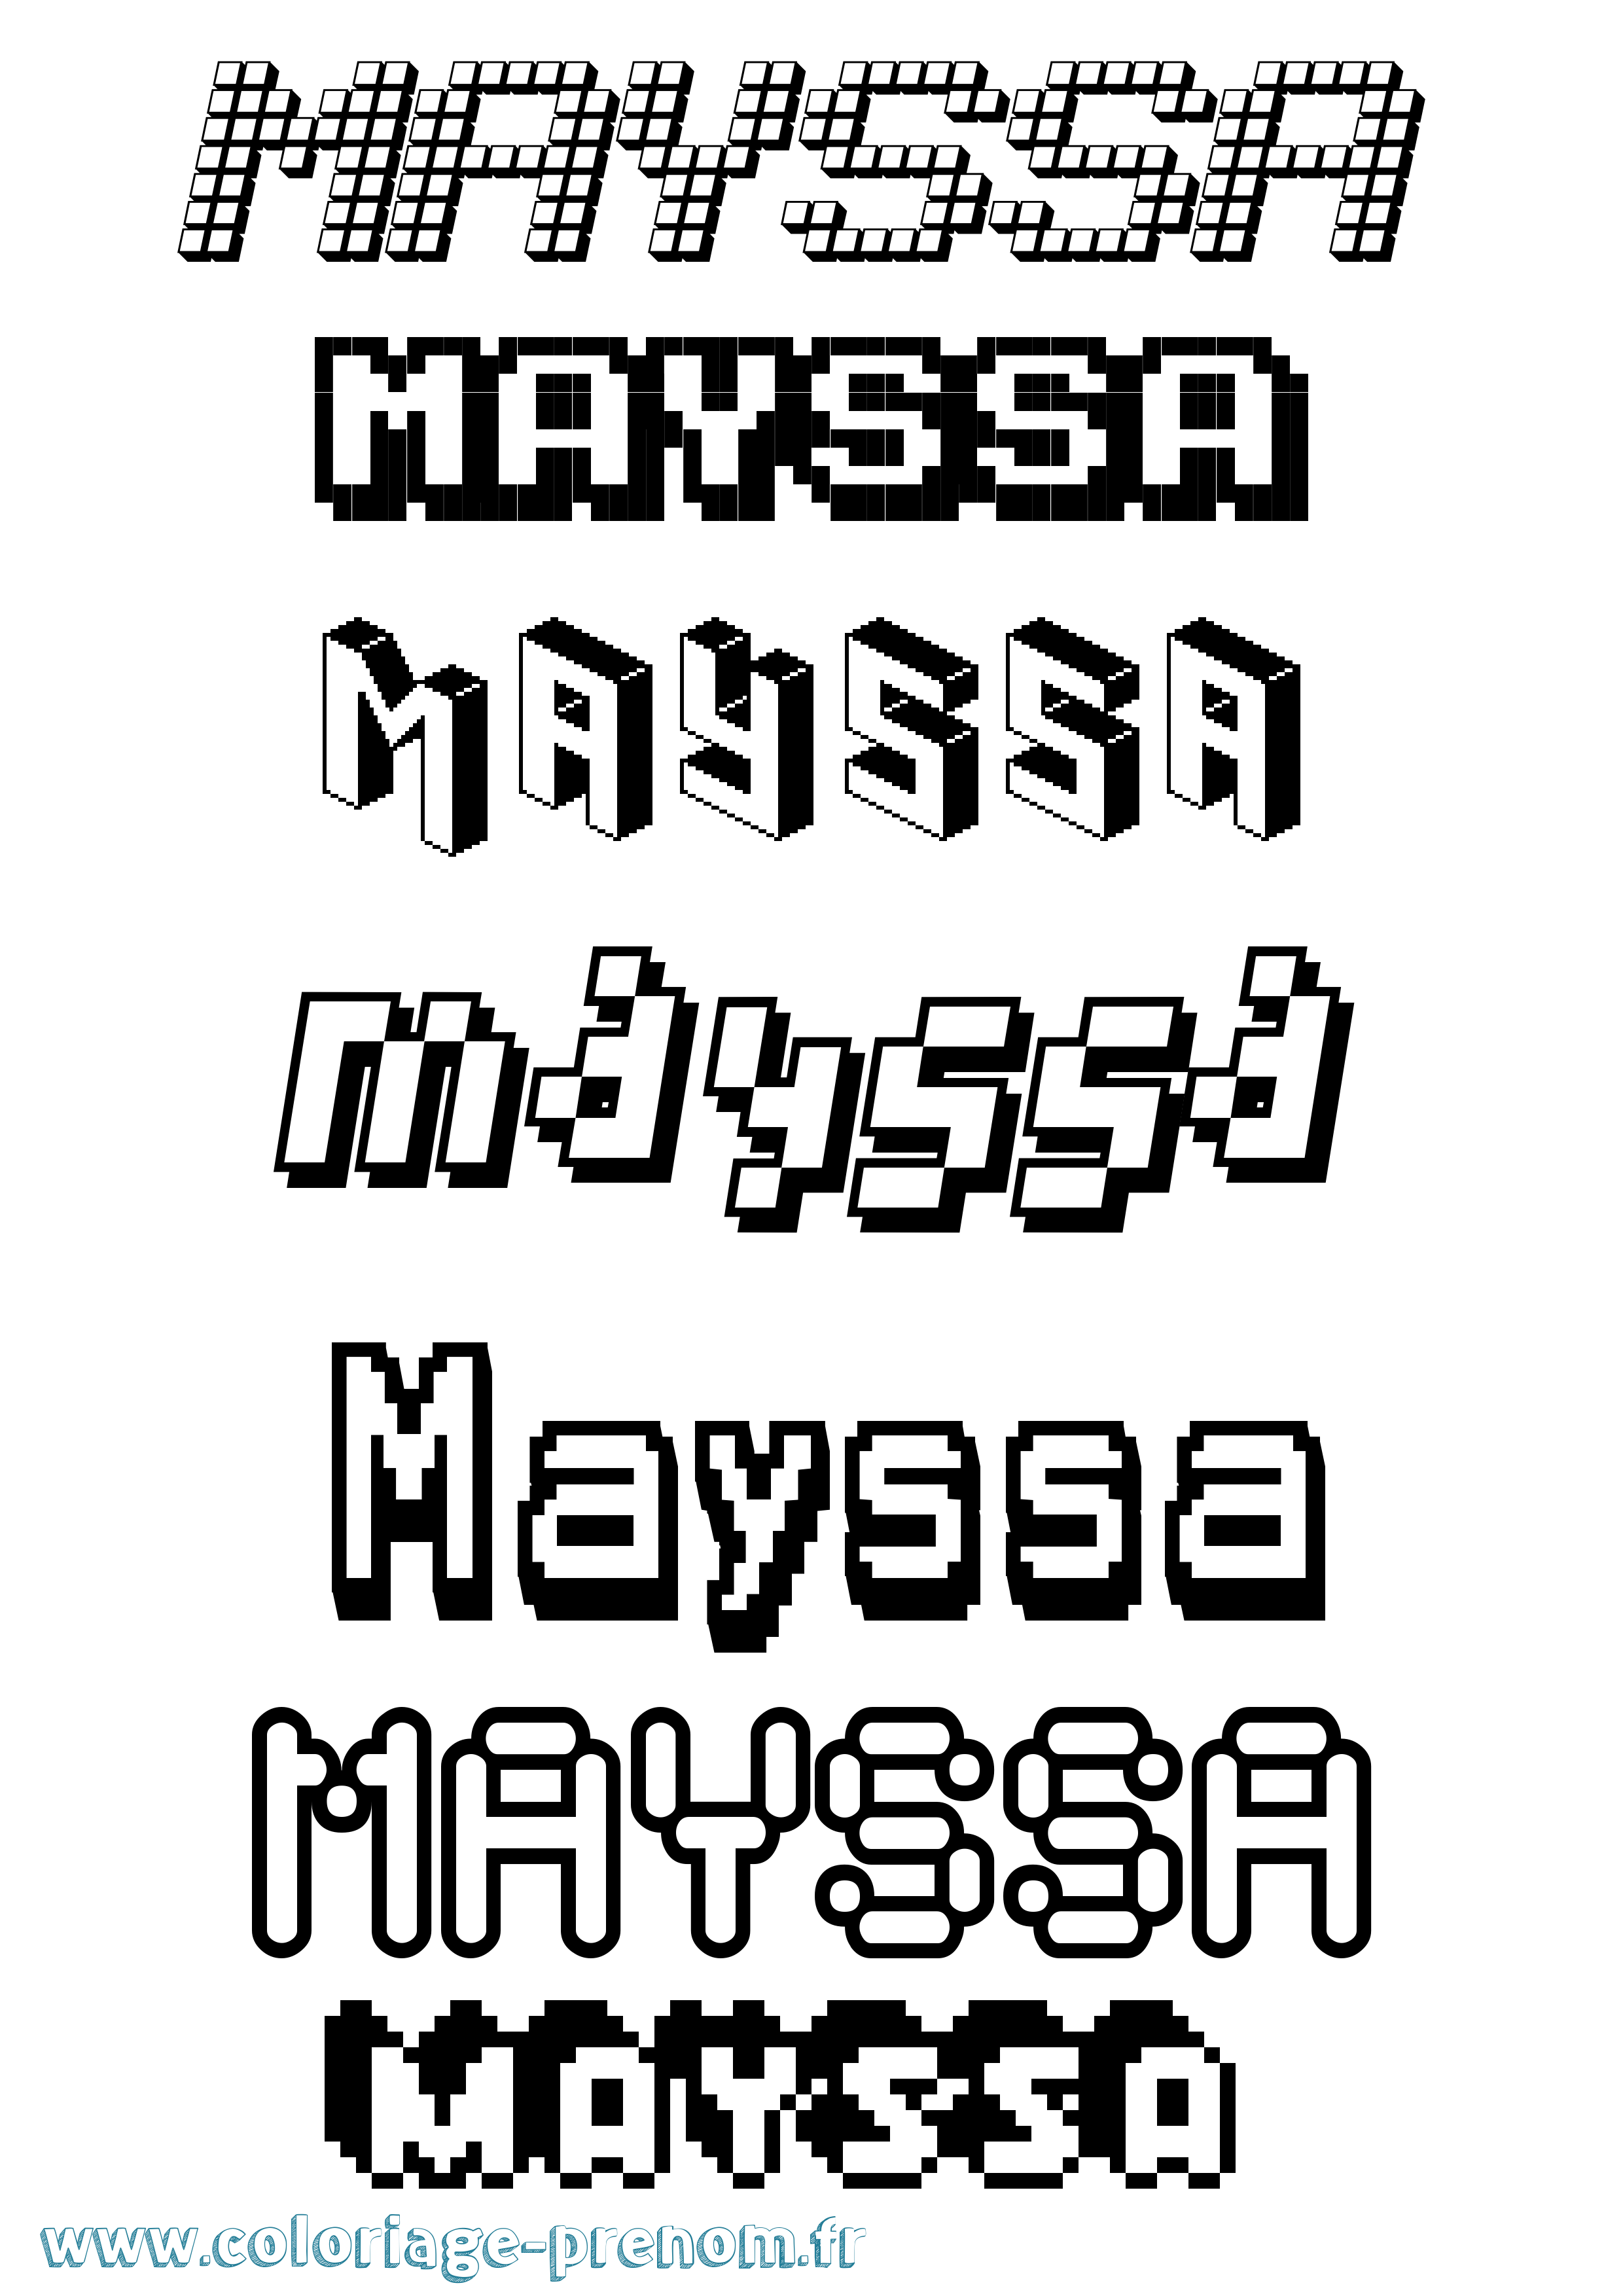 Coloriage prénom Mayssa